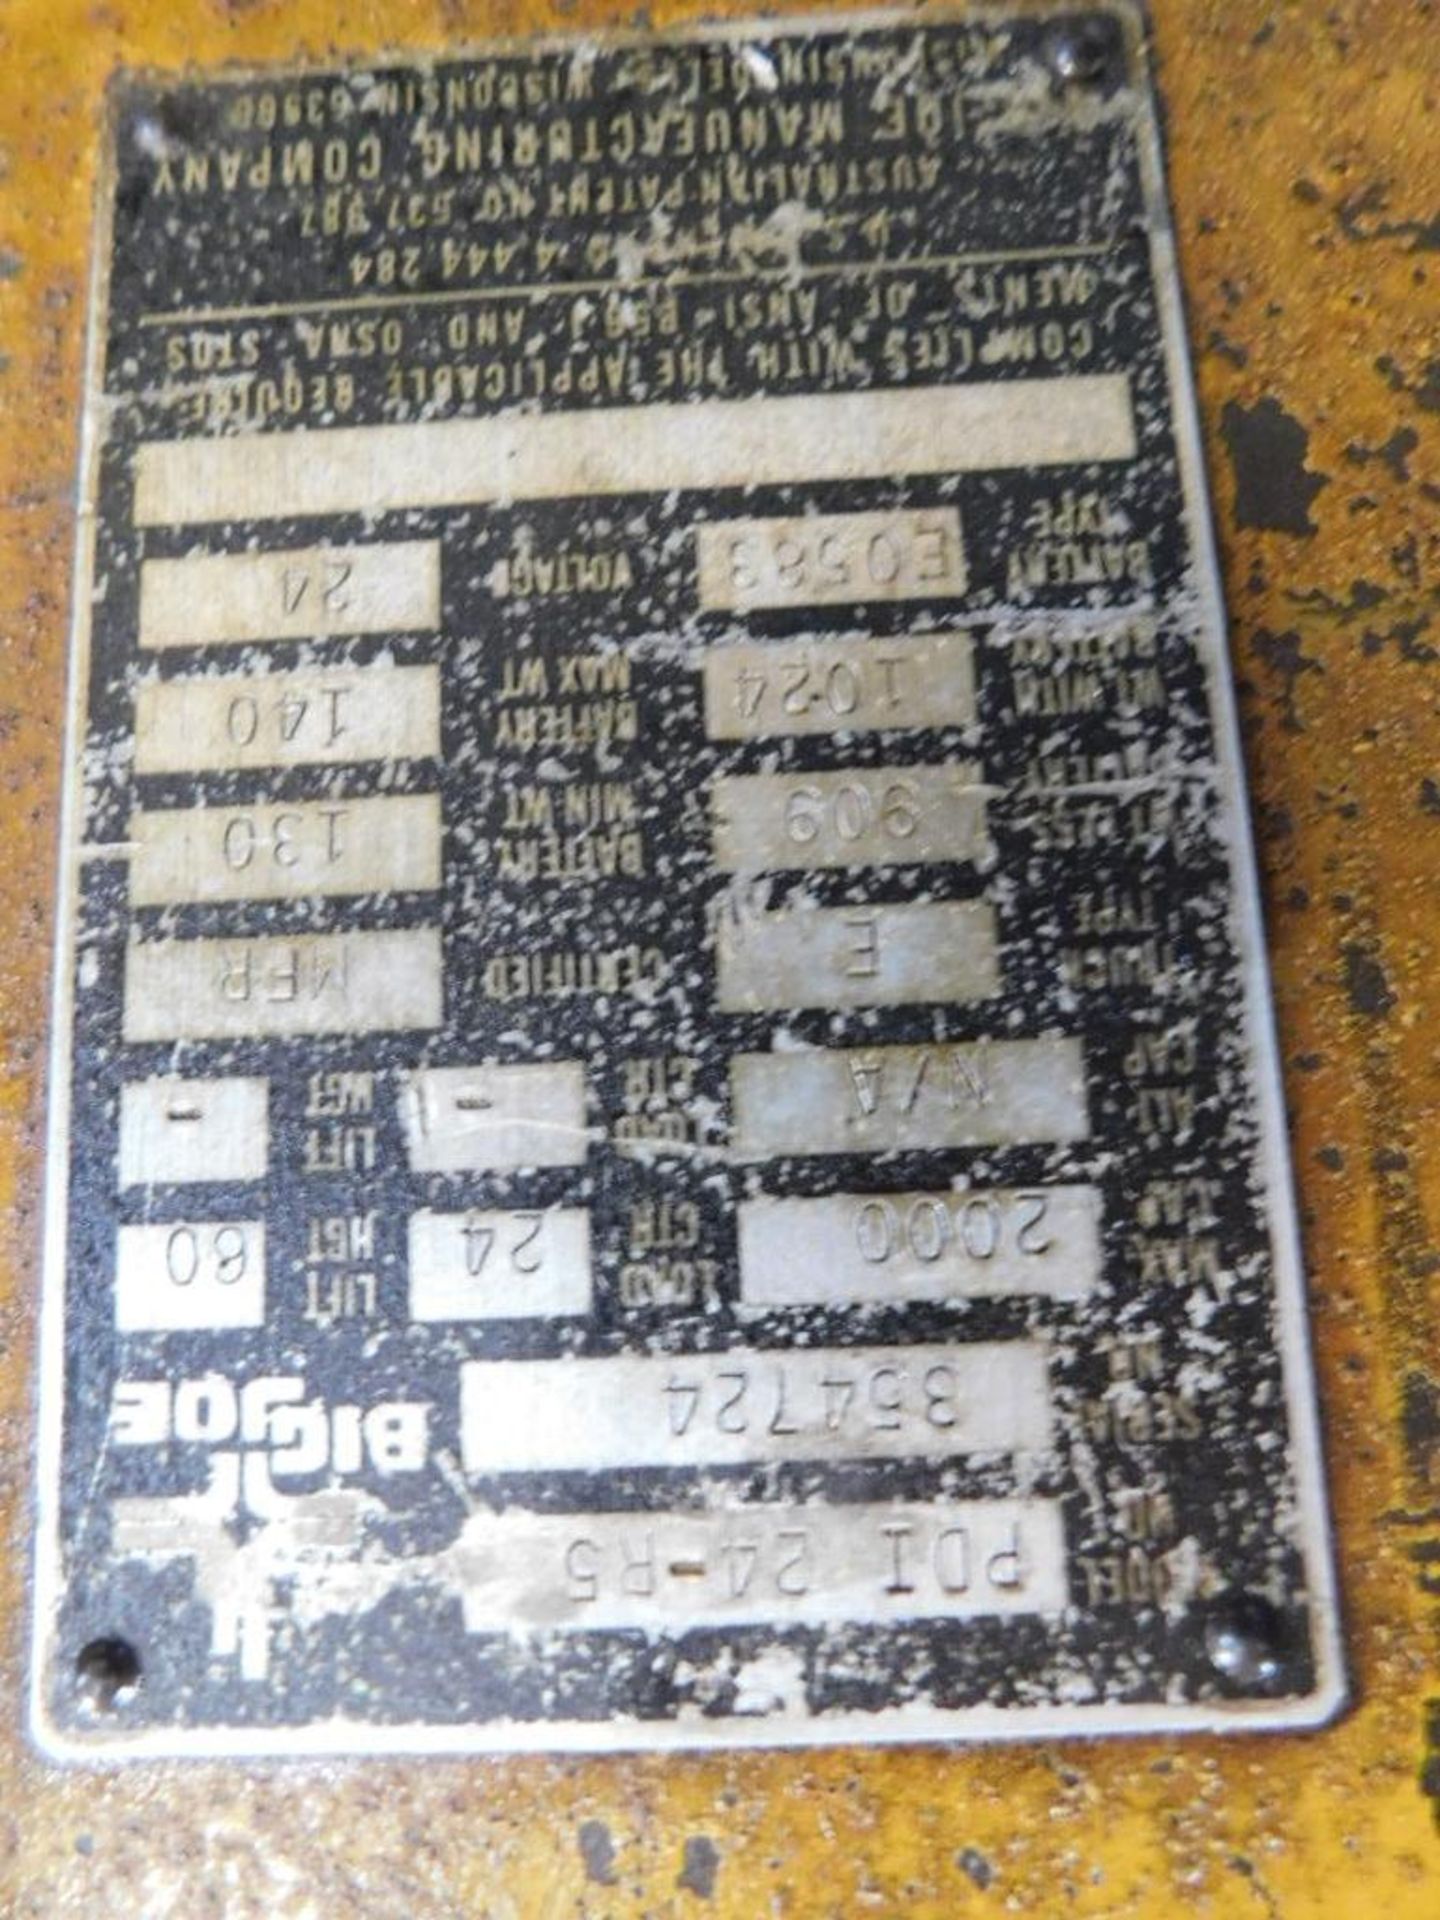 BIG JOE ELECTRIC PALLET JACK MODEL PDI-24-R5, S/N 354724, 2000 LB. CAPACITY - Image 3 of 3